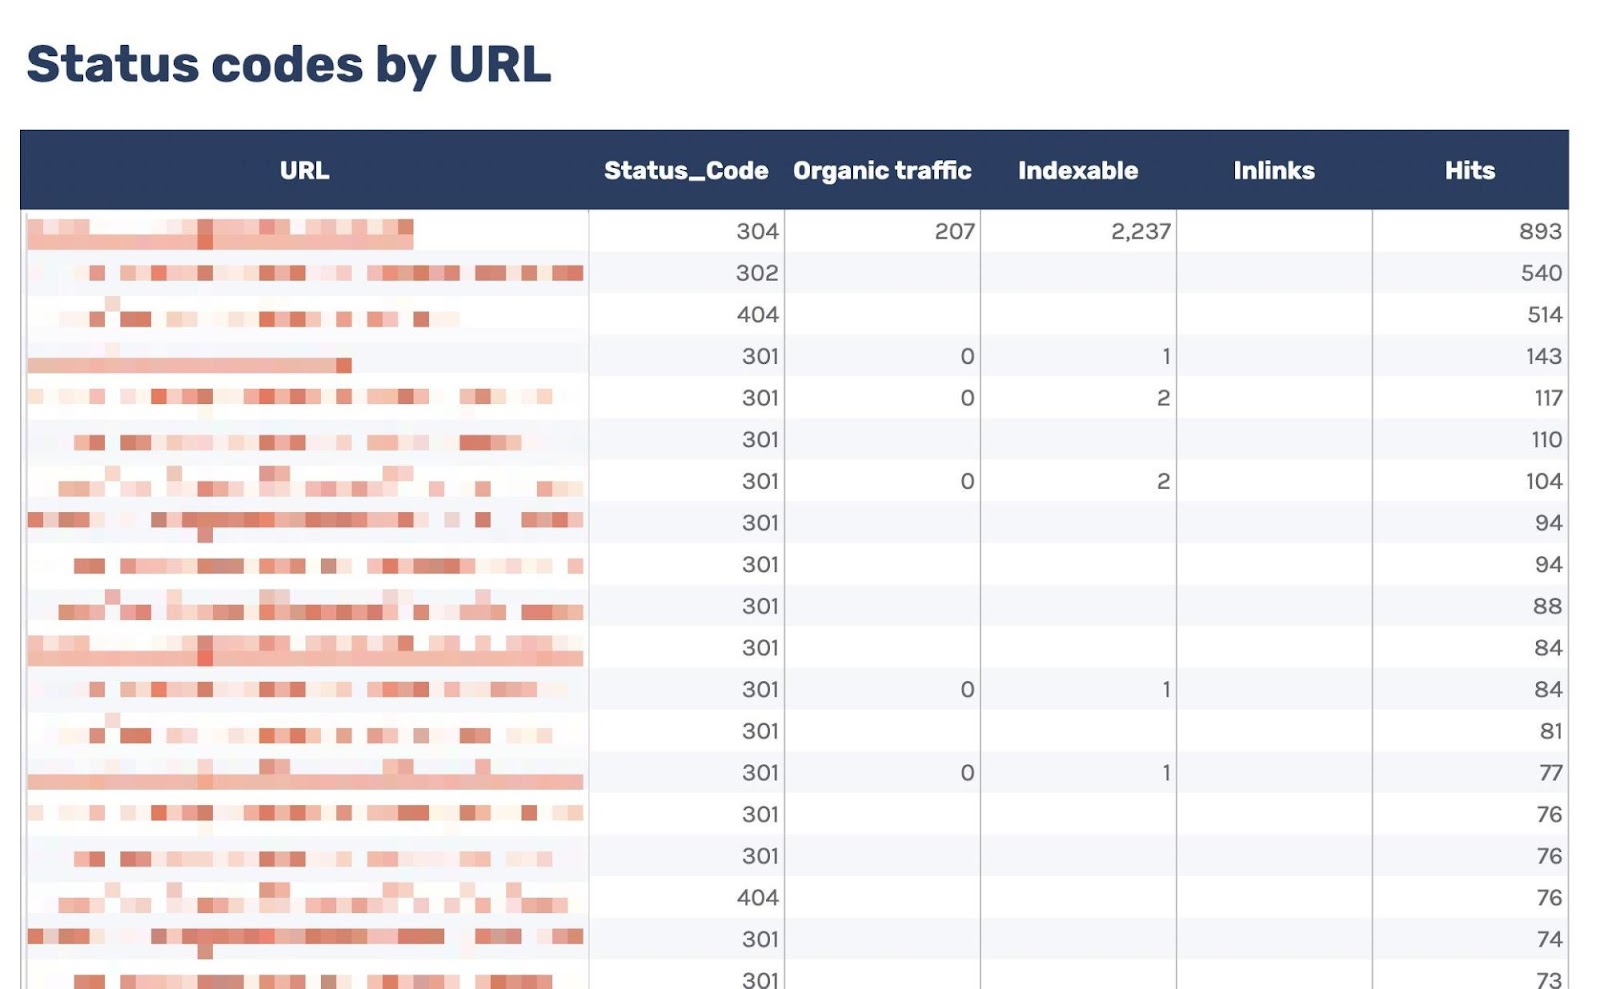 List of URLs with corresponding data like status codes, organic traffic, etc